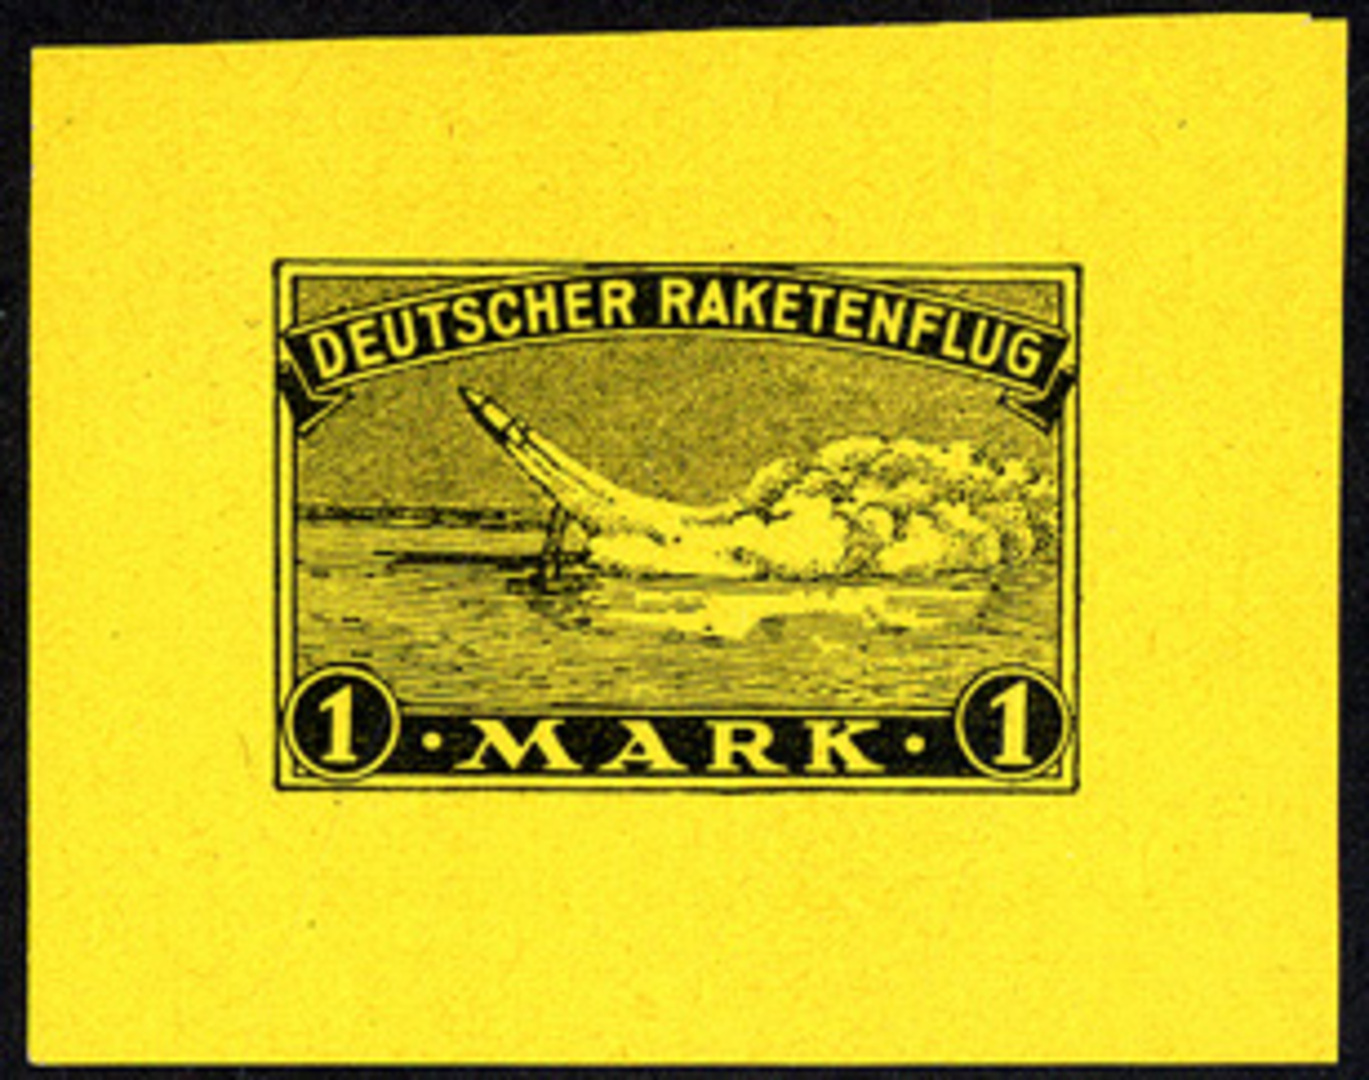 Rocket Mail Stamps